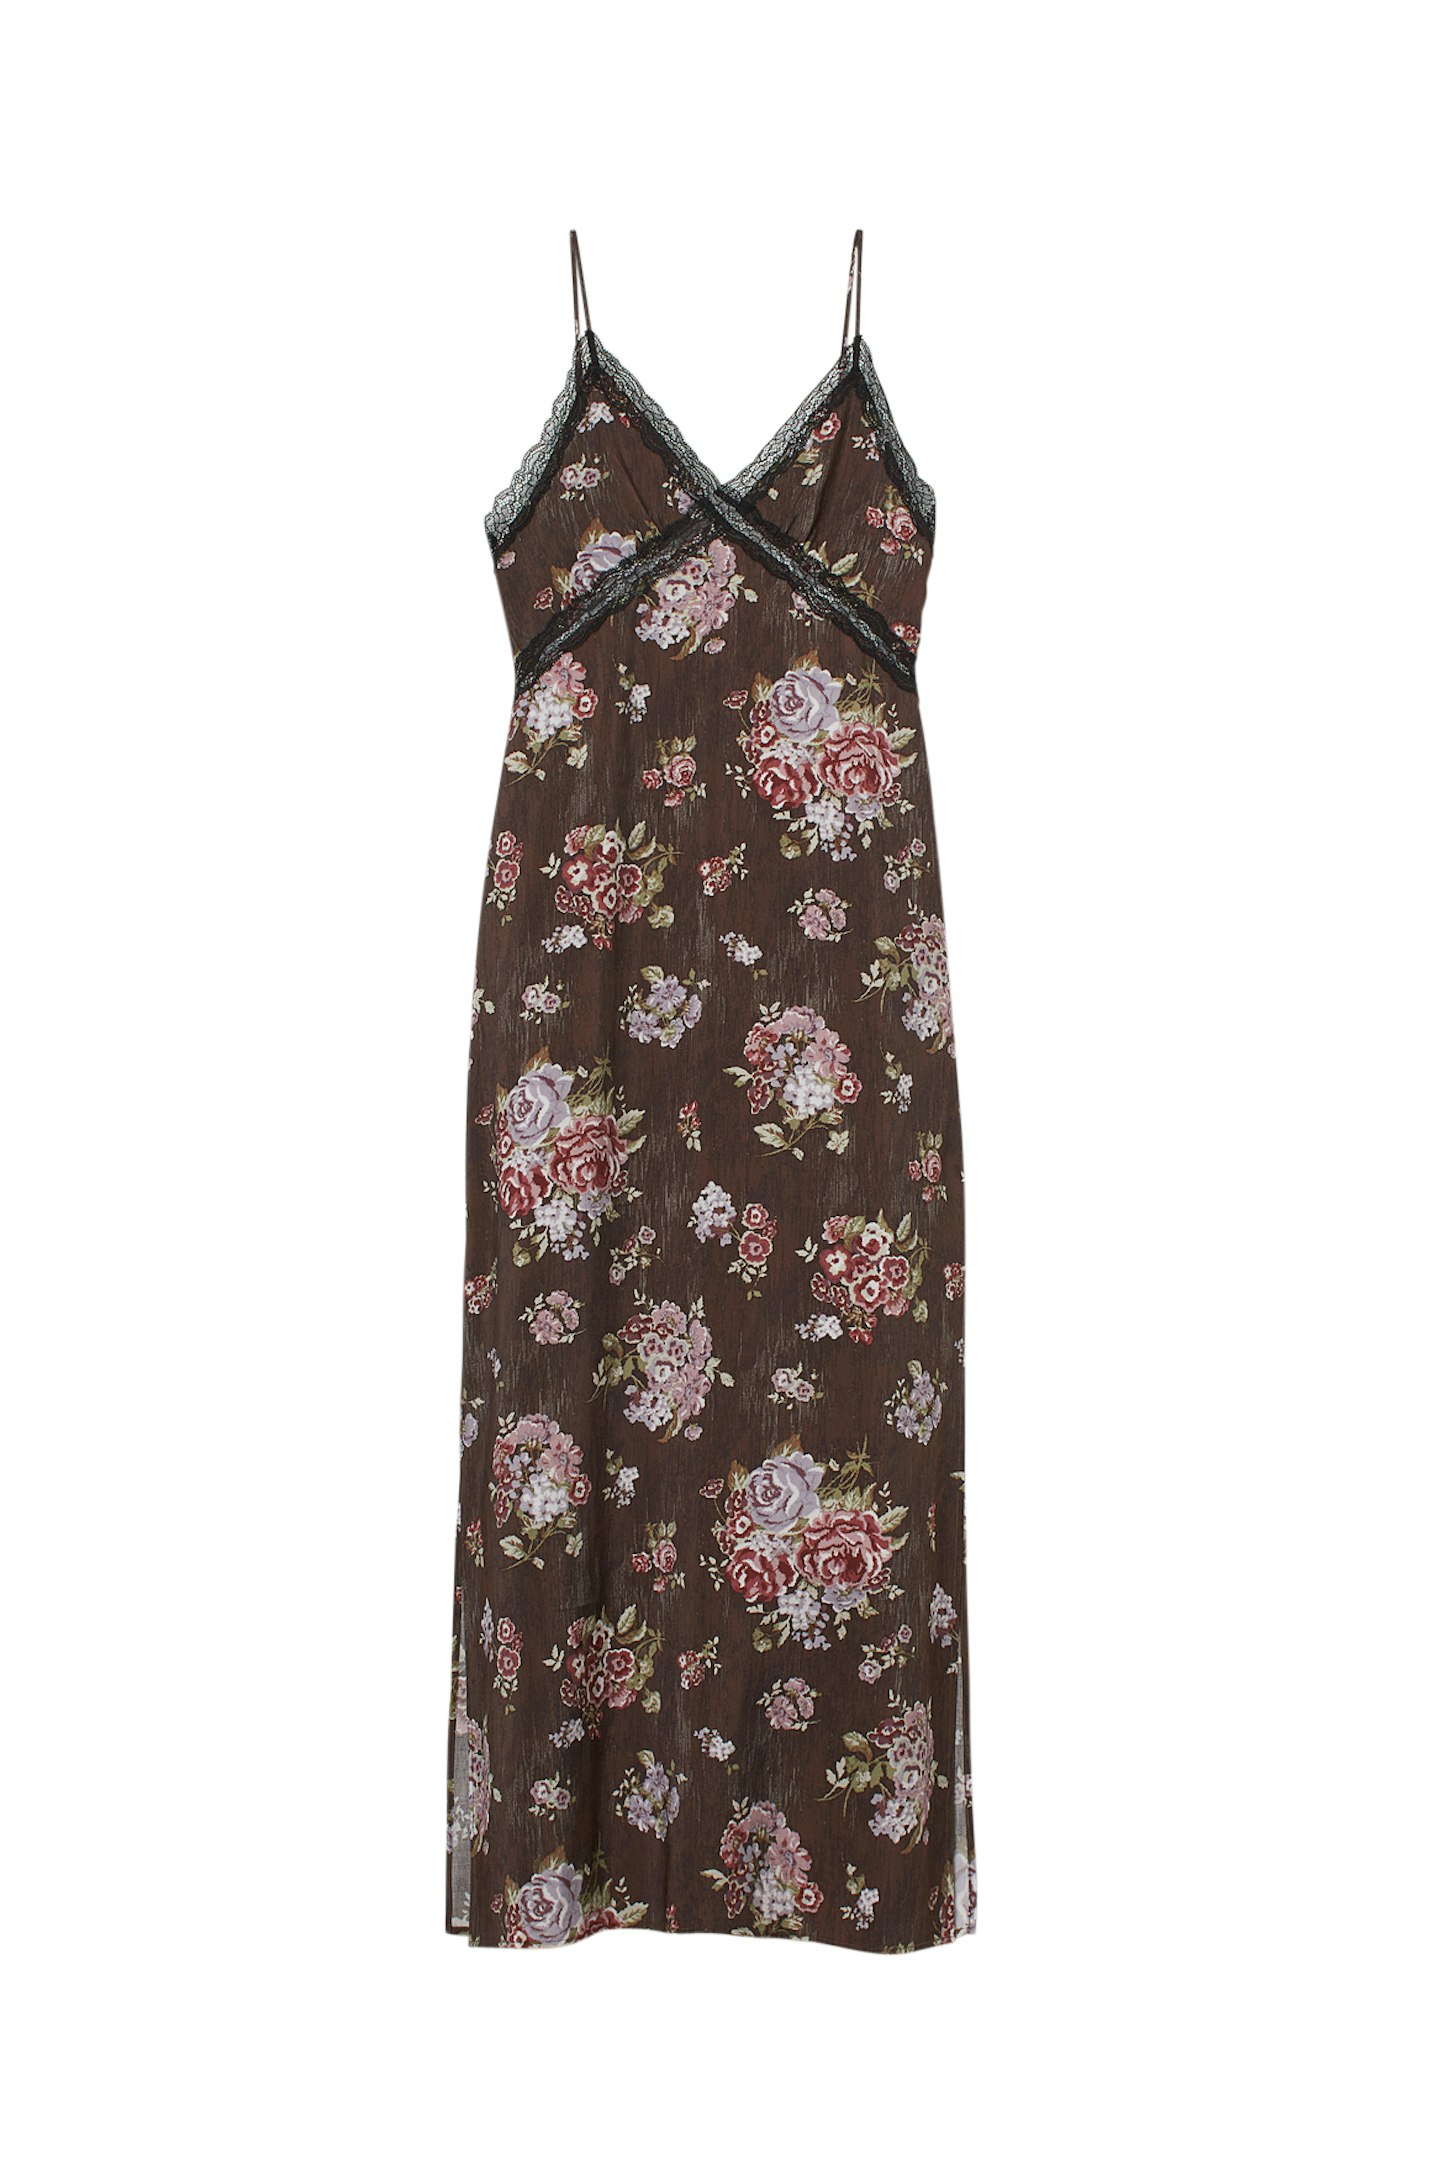 Lace-Trimmed Slip Dress, £29.99